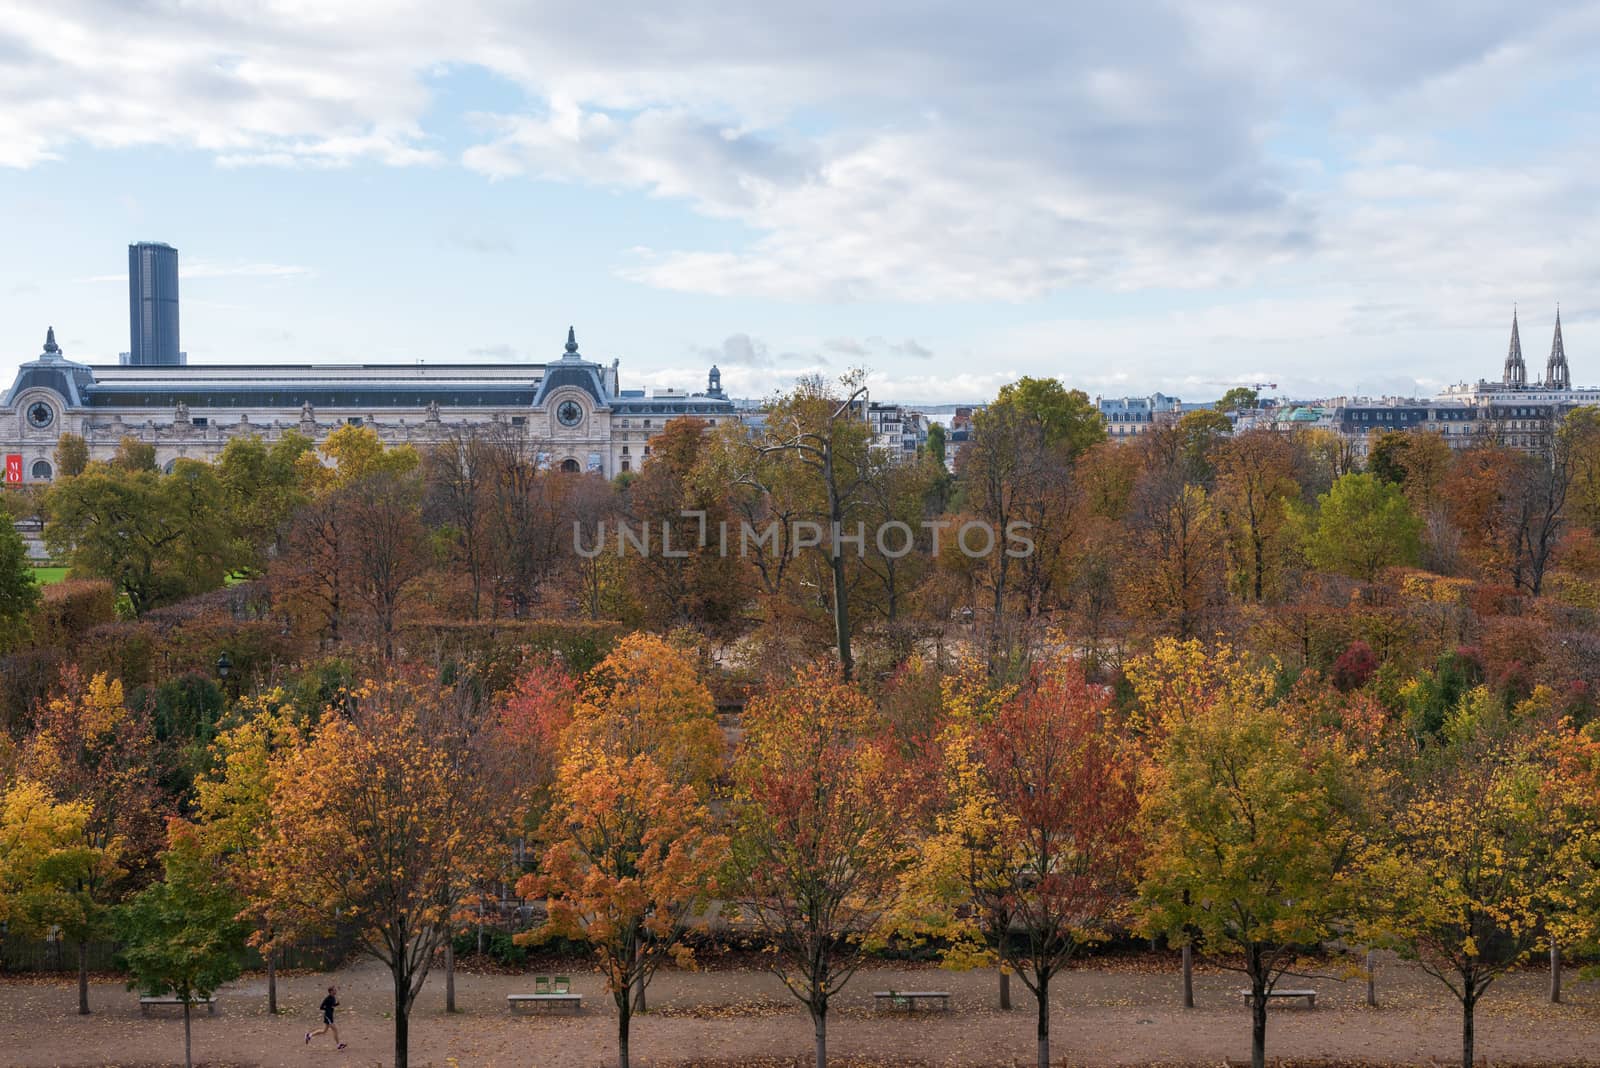 Overlooking the Tuileries Gardens in Paris by jfbenning